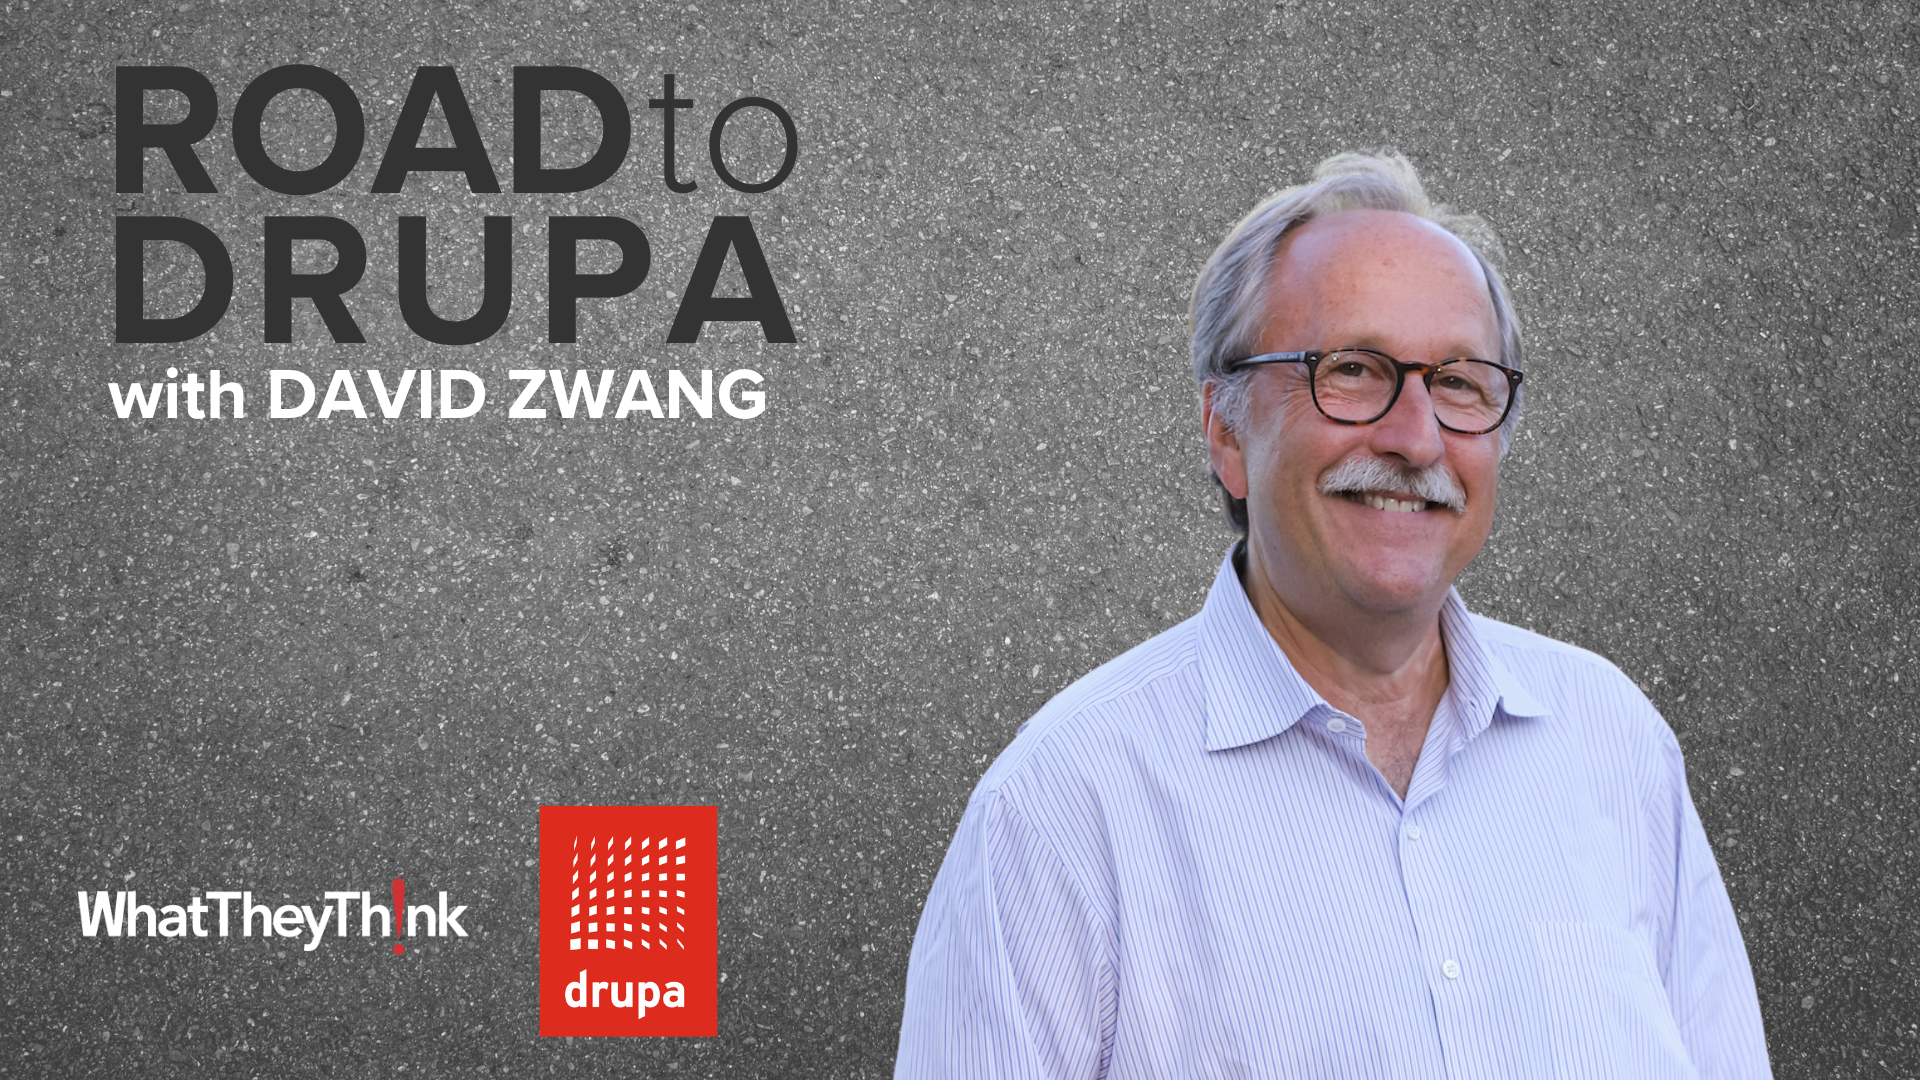 David Zwang On the Road to drupa